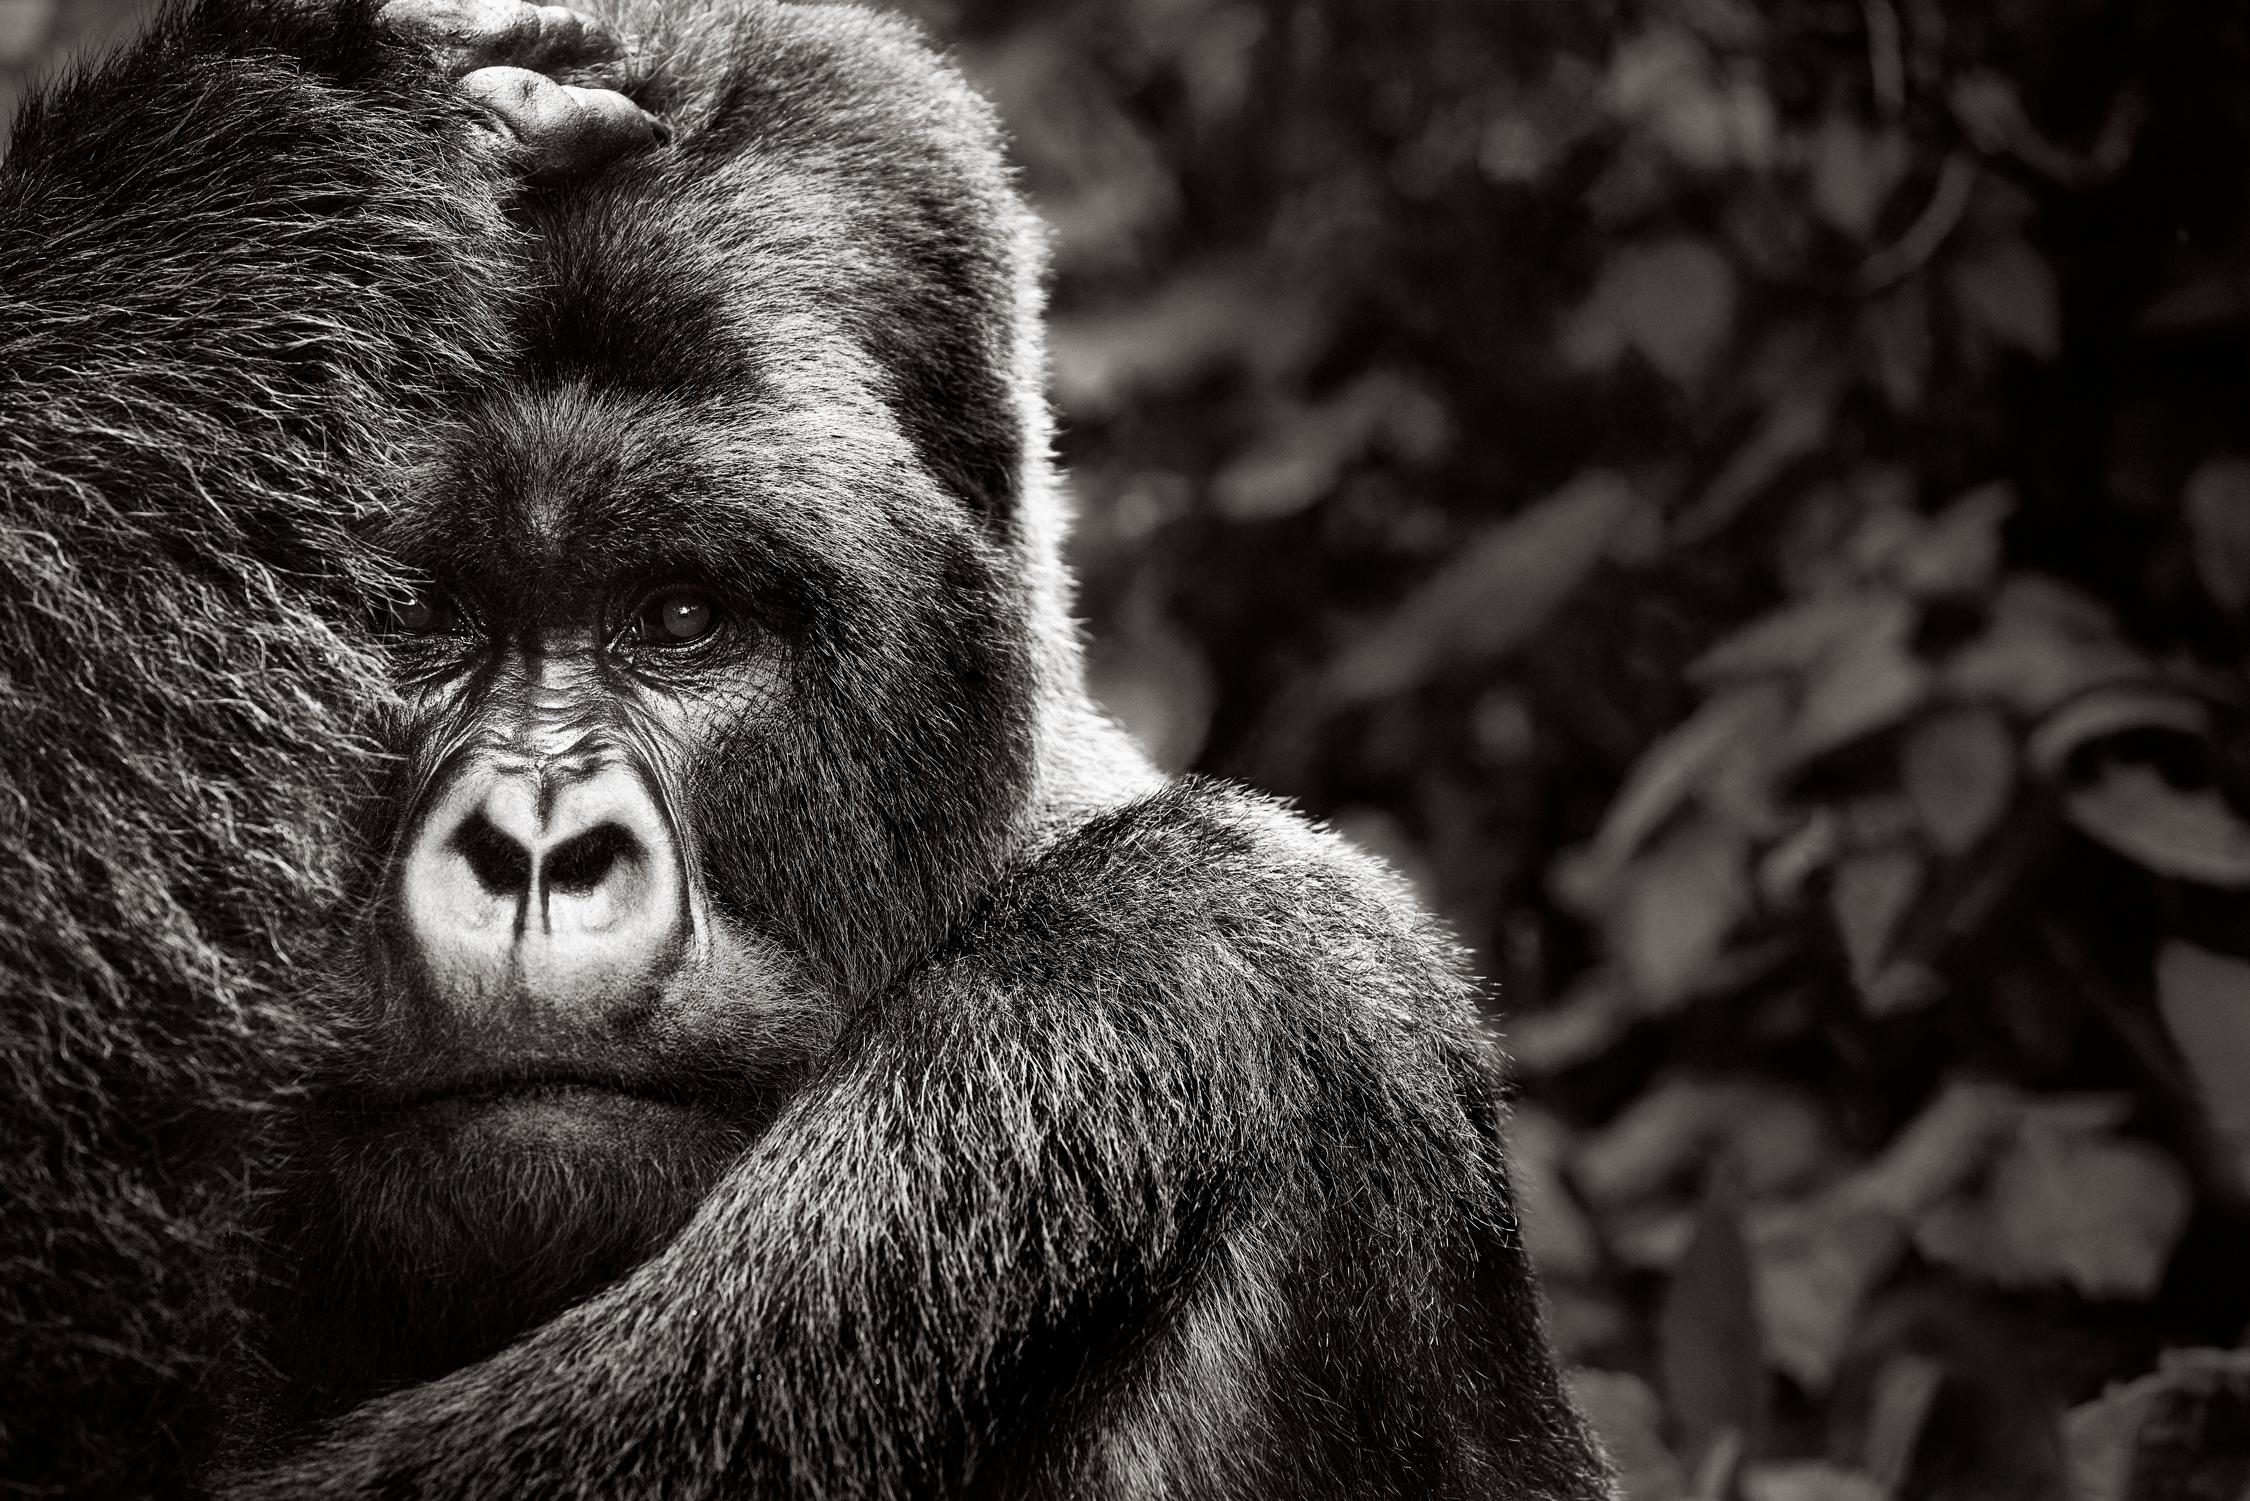 Drew Doggett Black and White Photograph - Intimate, Surreal, Fashion-Inspired Portrait of a Mountain Gorilla